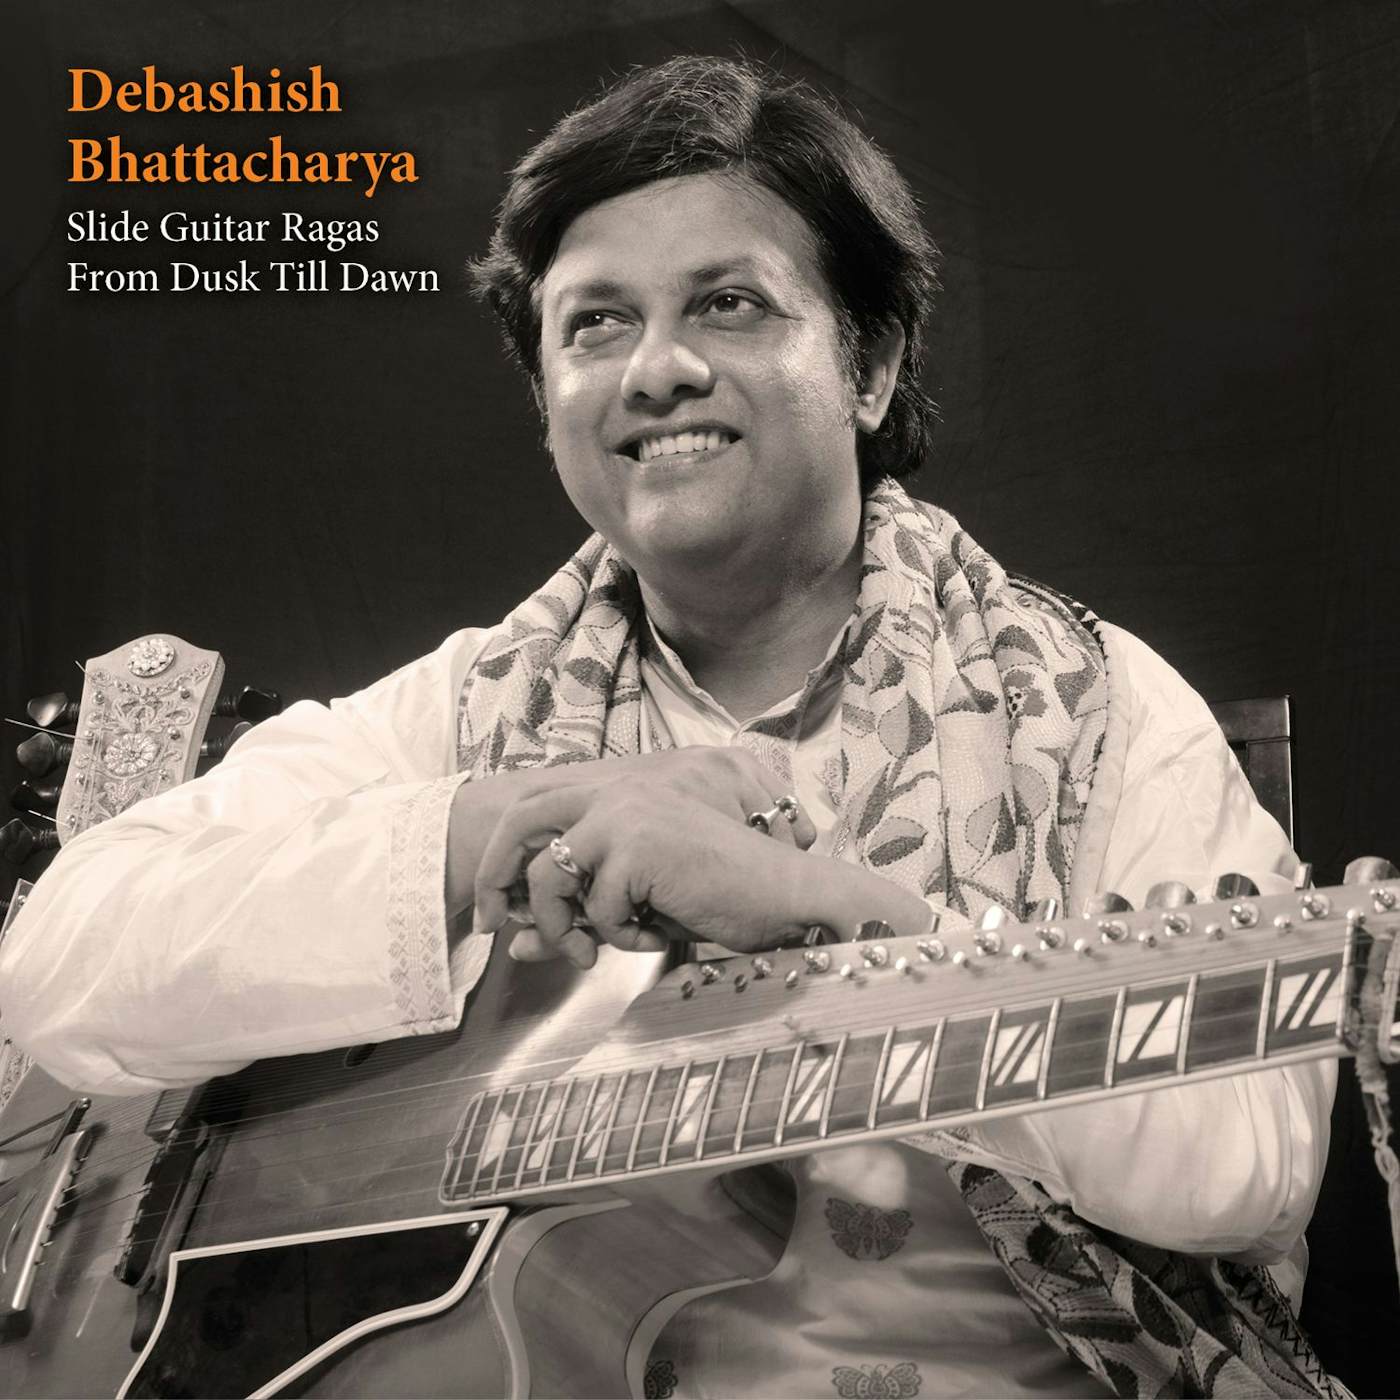 Debashish Bhattacharya SLIDE-GUITAR RAGAS FROM DUSK TILL DAWN CD